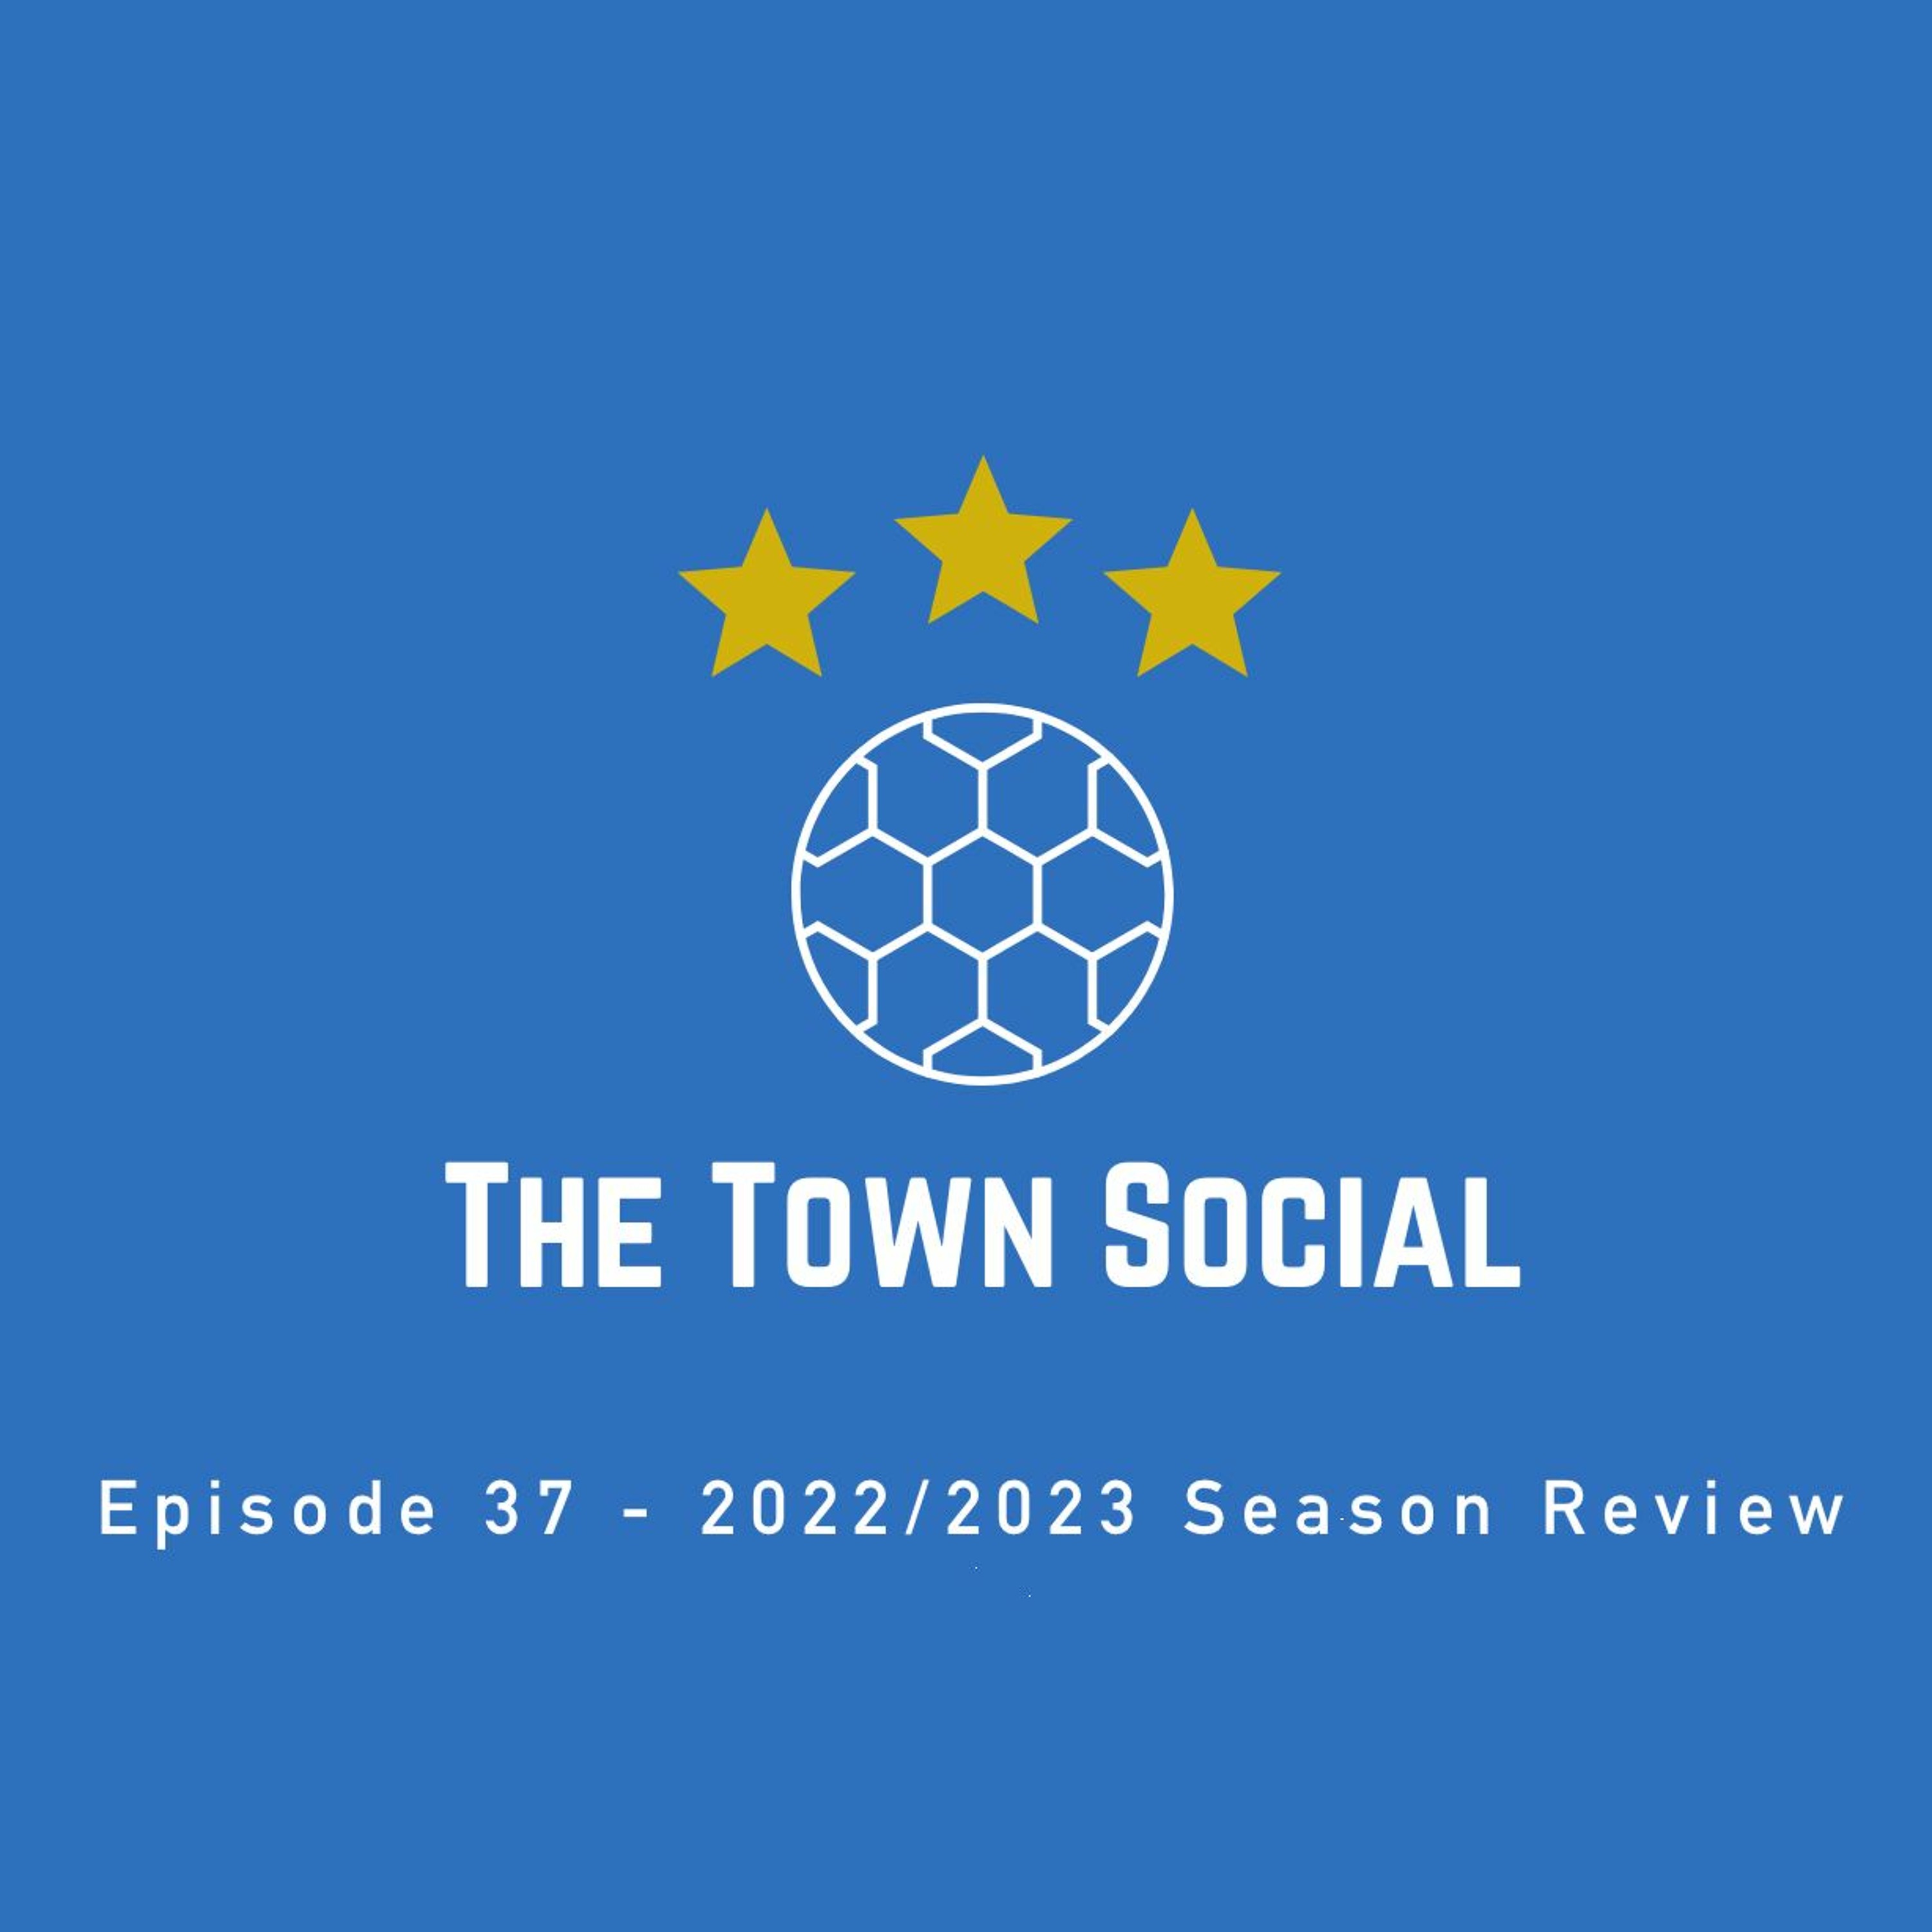 2022/2023 Season Review - Episode 37